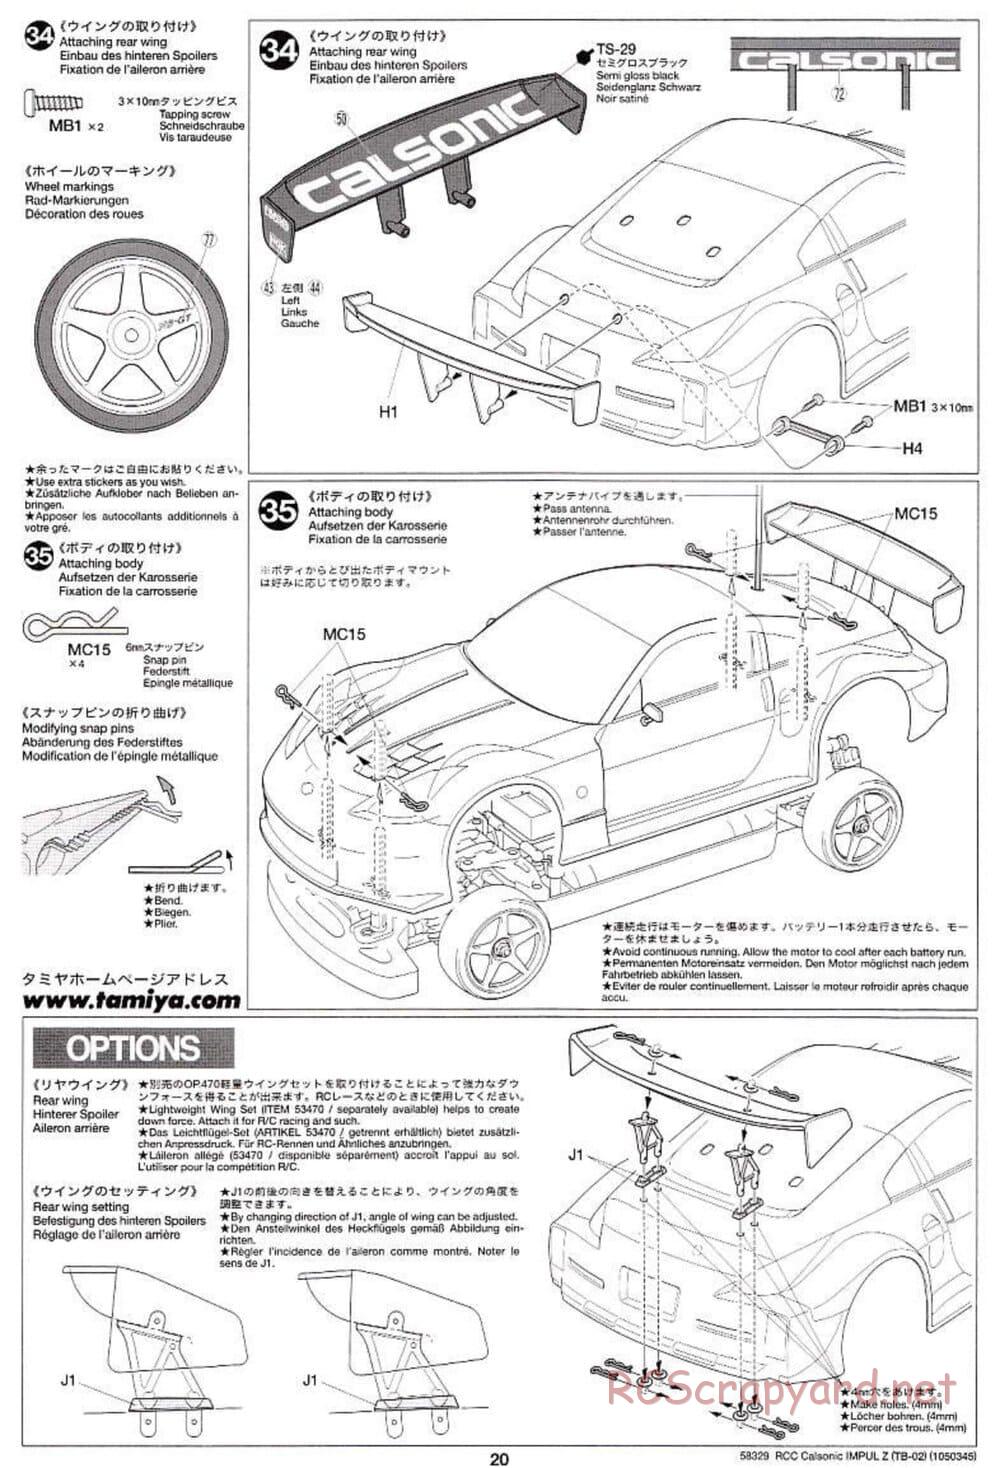 Tamiya - Calsonic Impul Z - TB-02 Chassis - Manual - Page 20